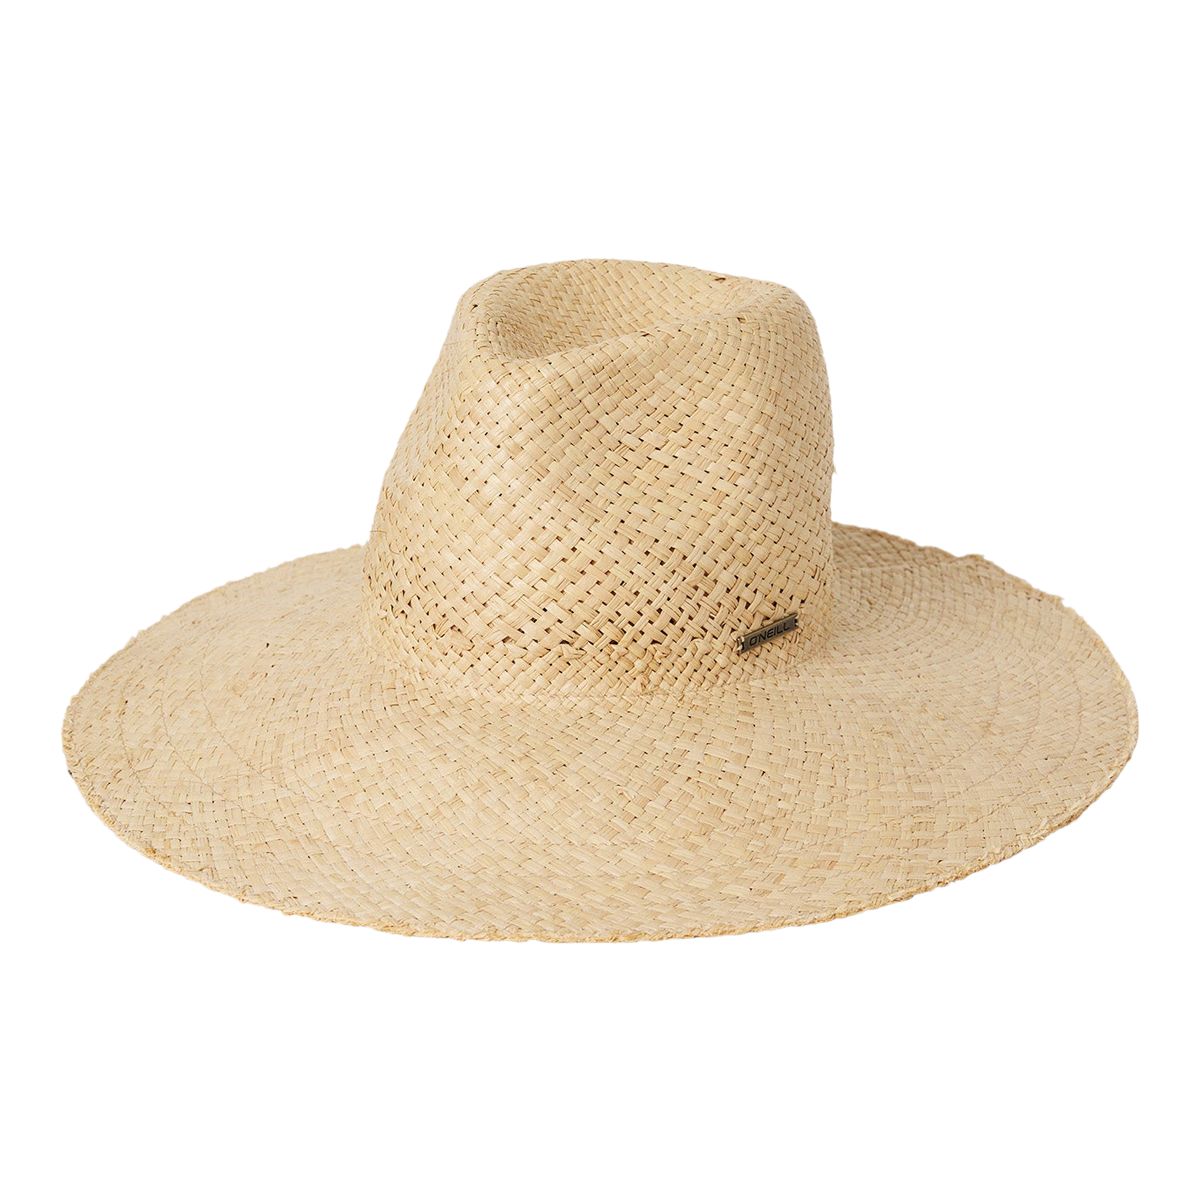 O'Neill Women's Hermosa Sun Hat